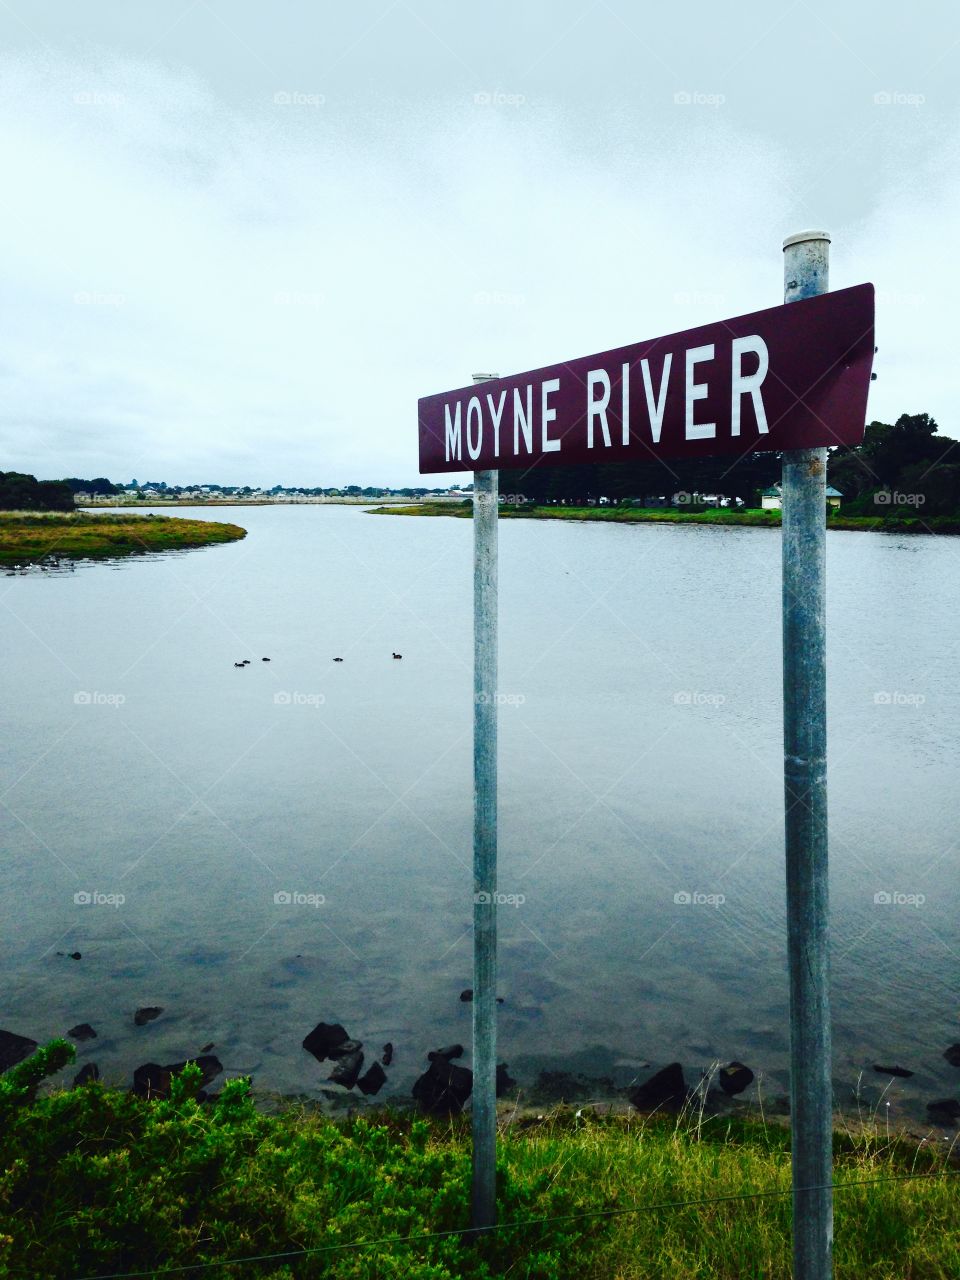 Moyne River